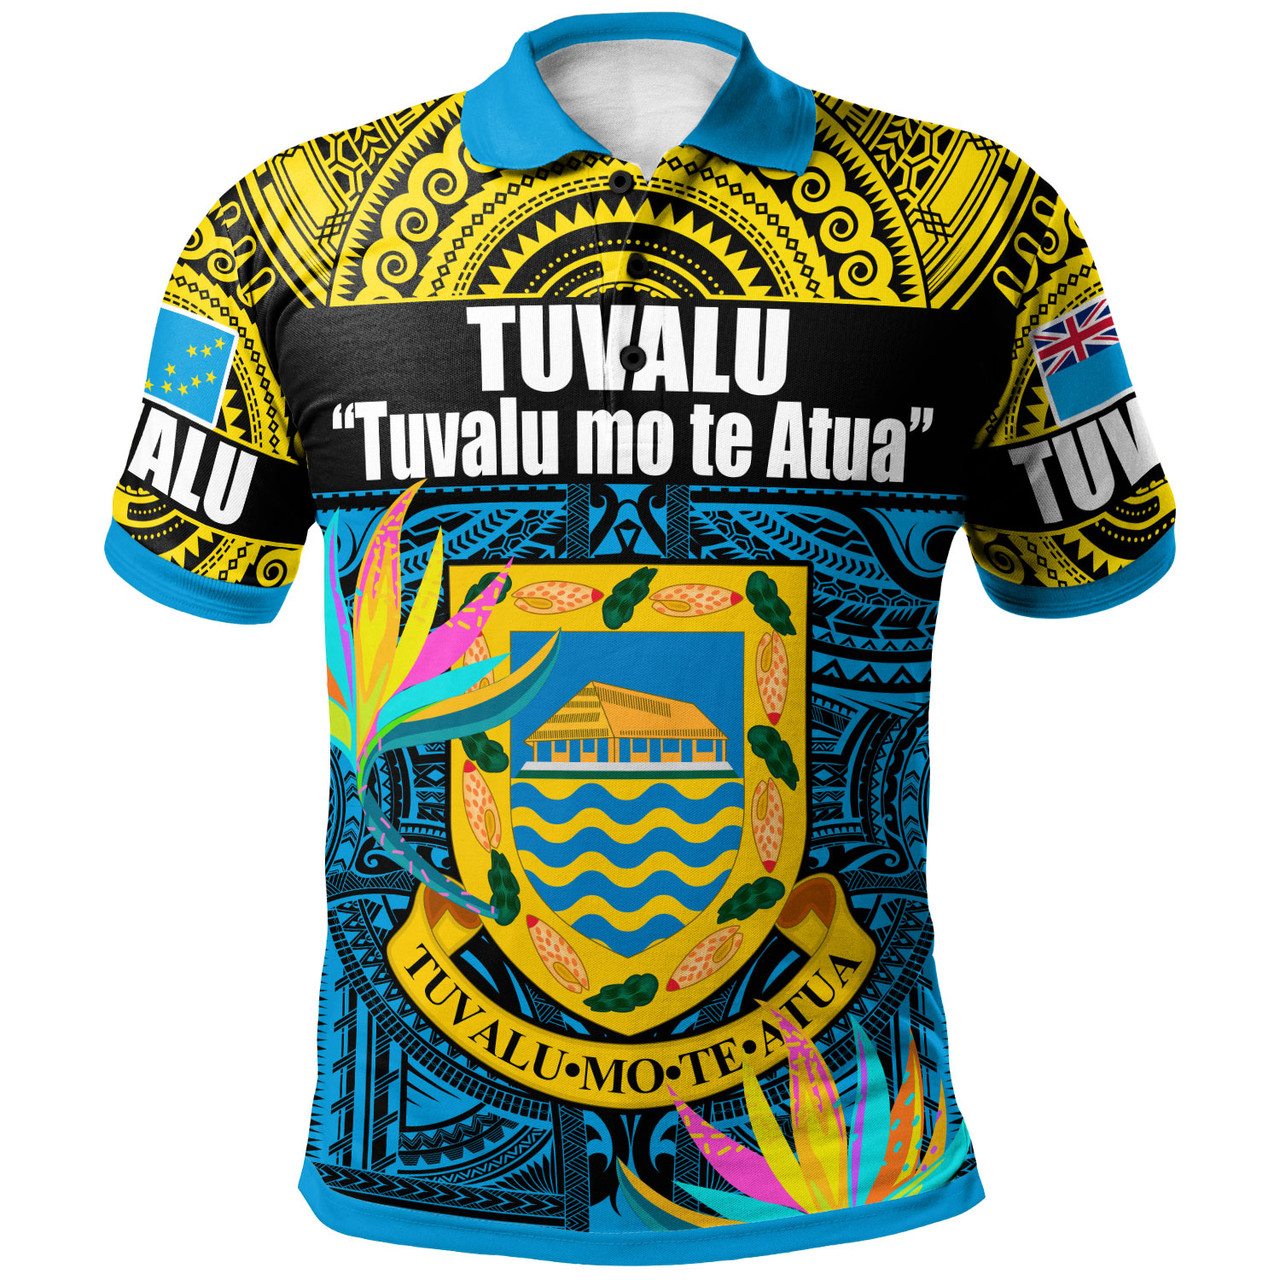 Tuvalu Motto Polynesian Polo Shirt - Custom Tuvalu Coat Of Arms With Tropical Themed Backgrounds Polo Shirt